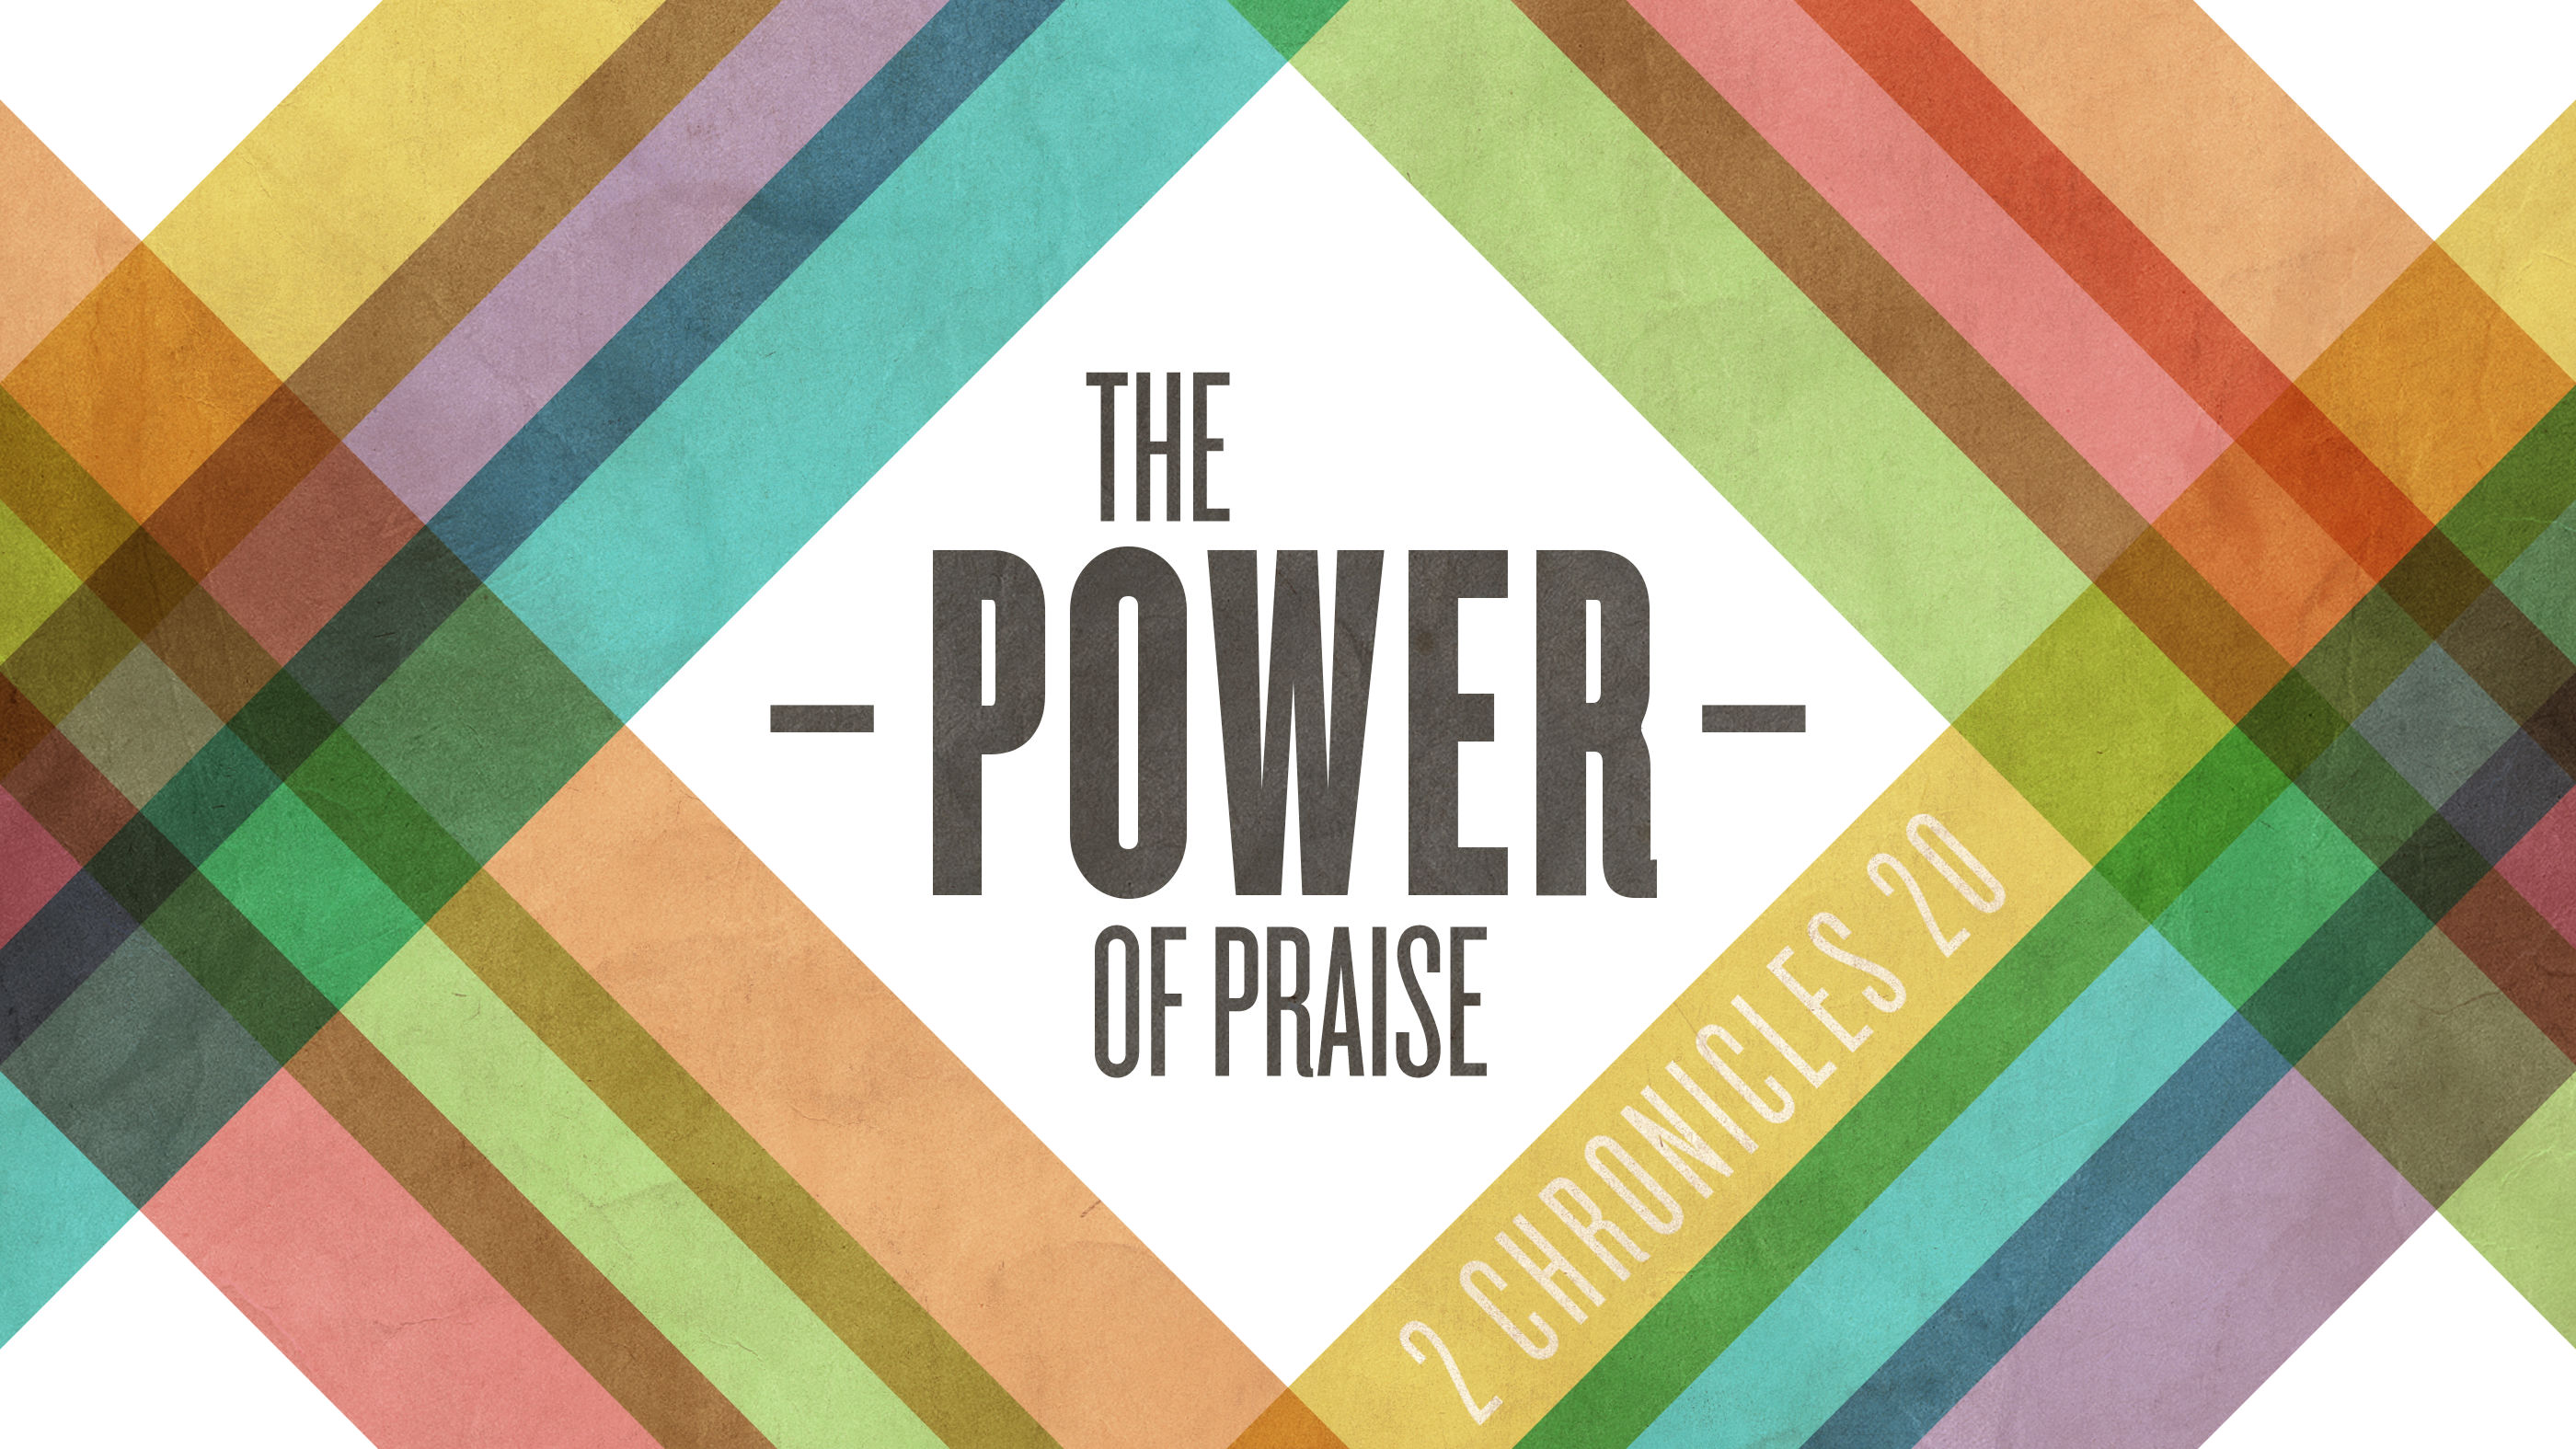 The POWER of PRAISE